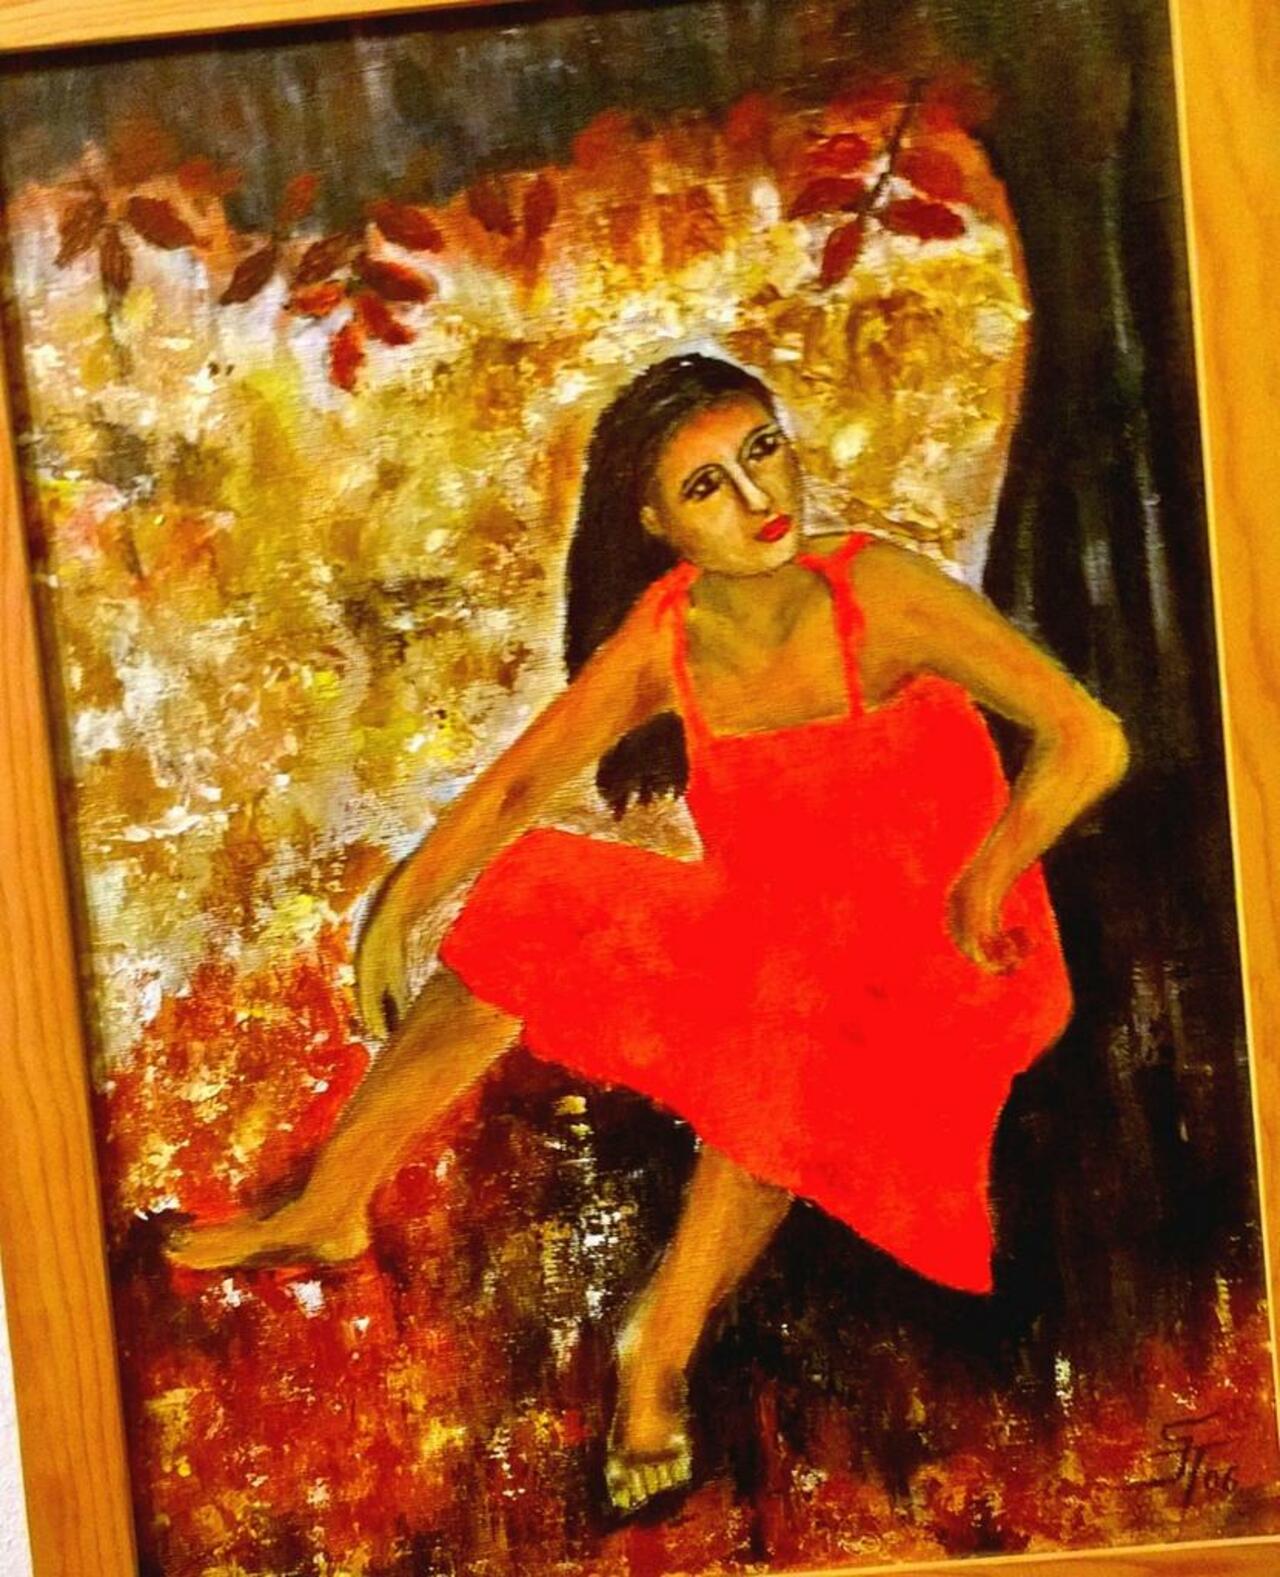 #woman #red #art #painting #acrylics http://t.co/NEtmtS2E0M